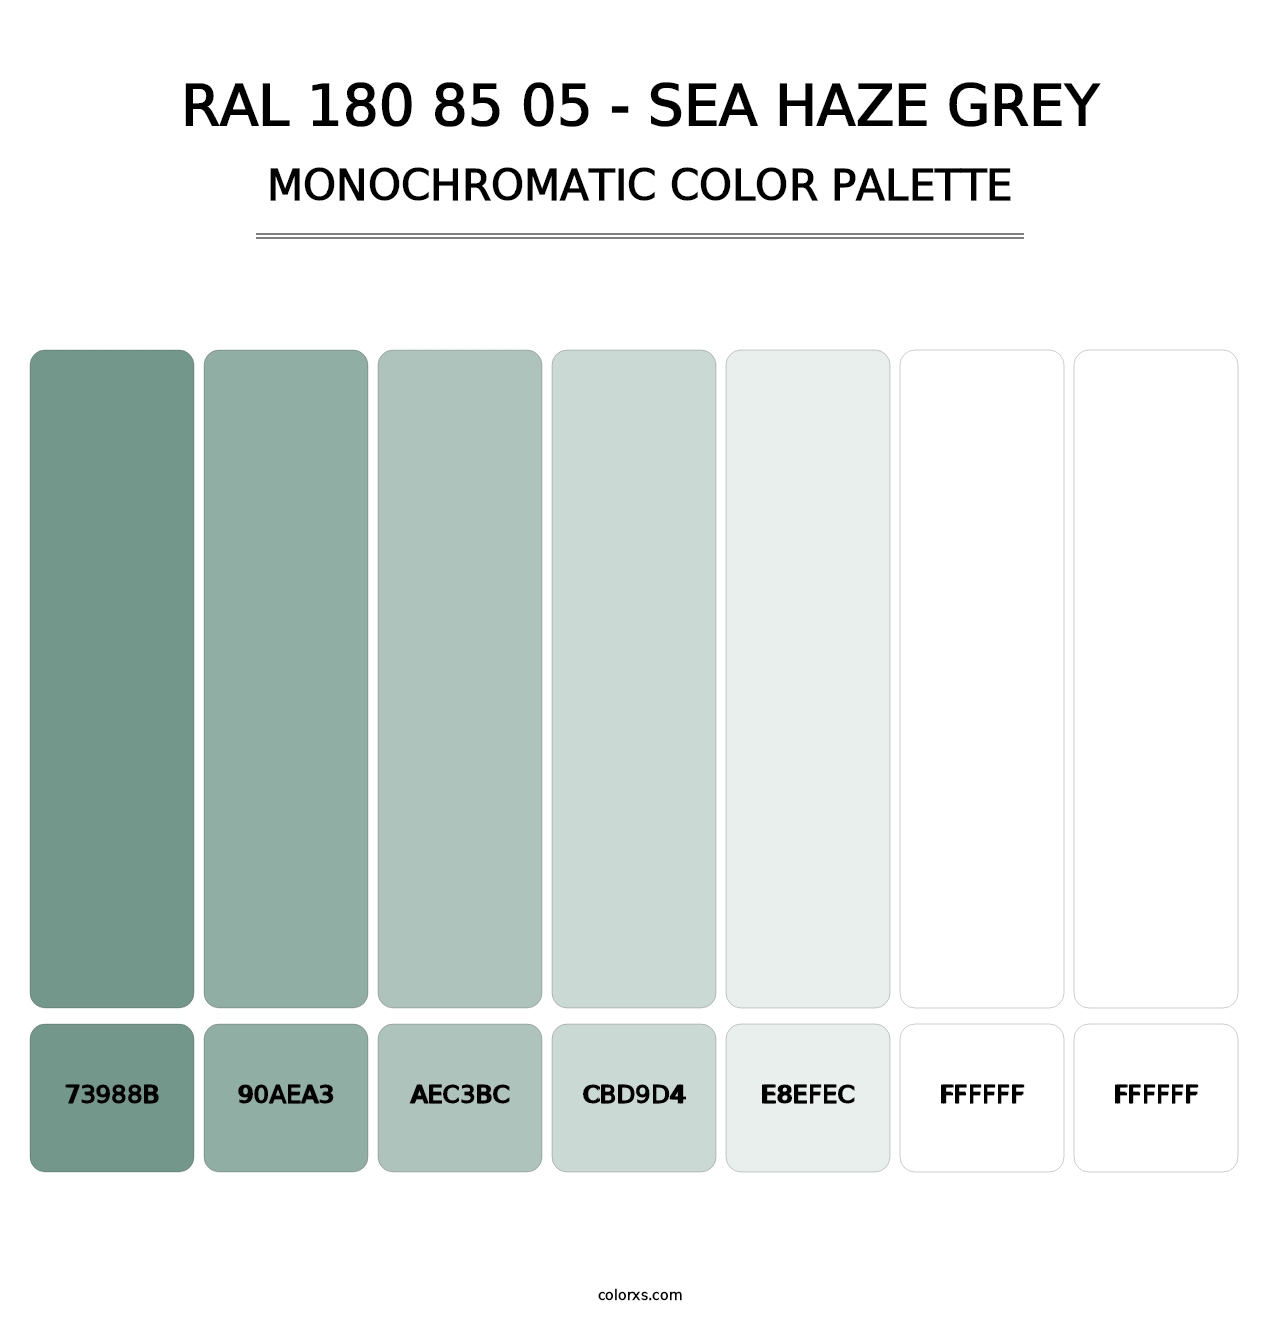 RAL 180 85 05 - Sea Haze Grey - Monochromatic Color Palette